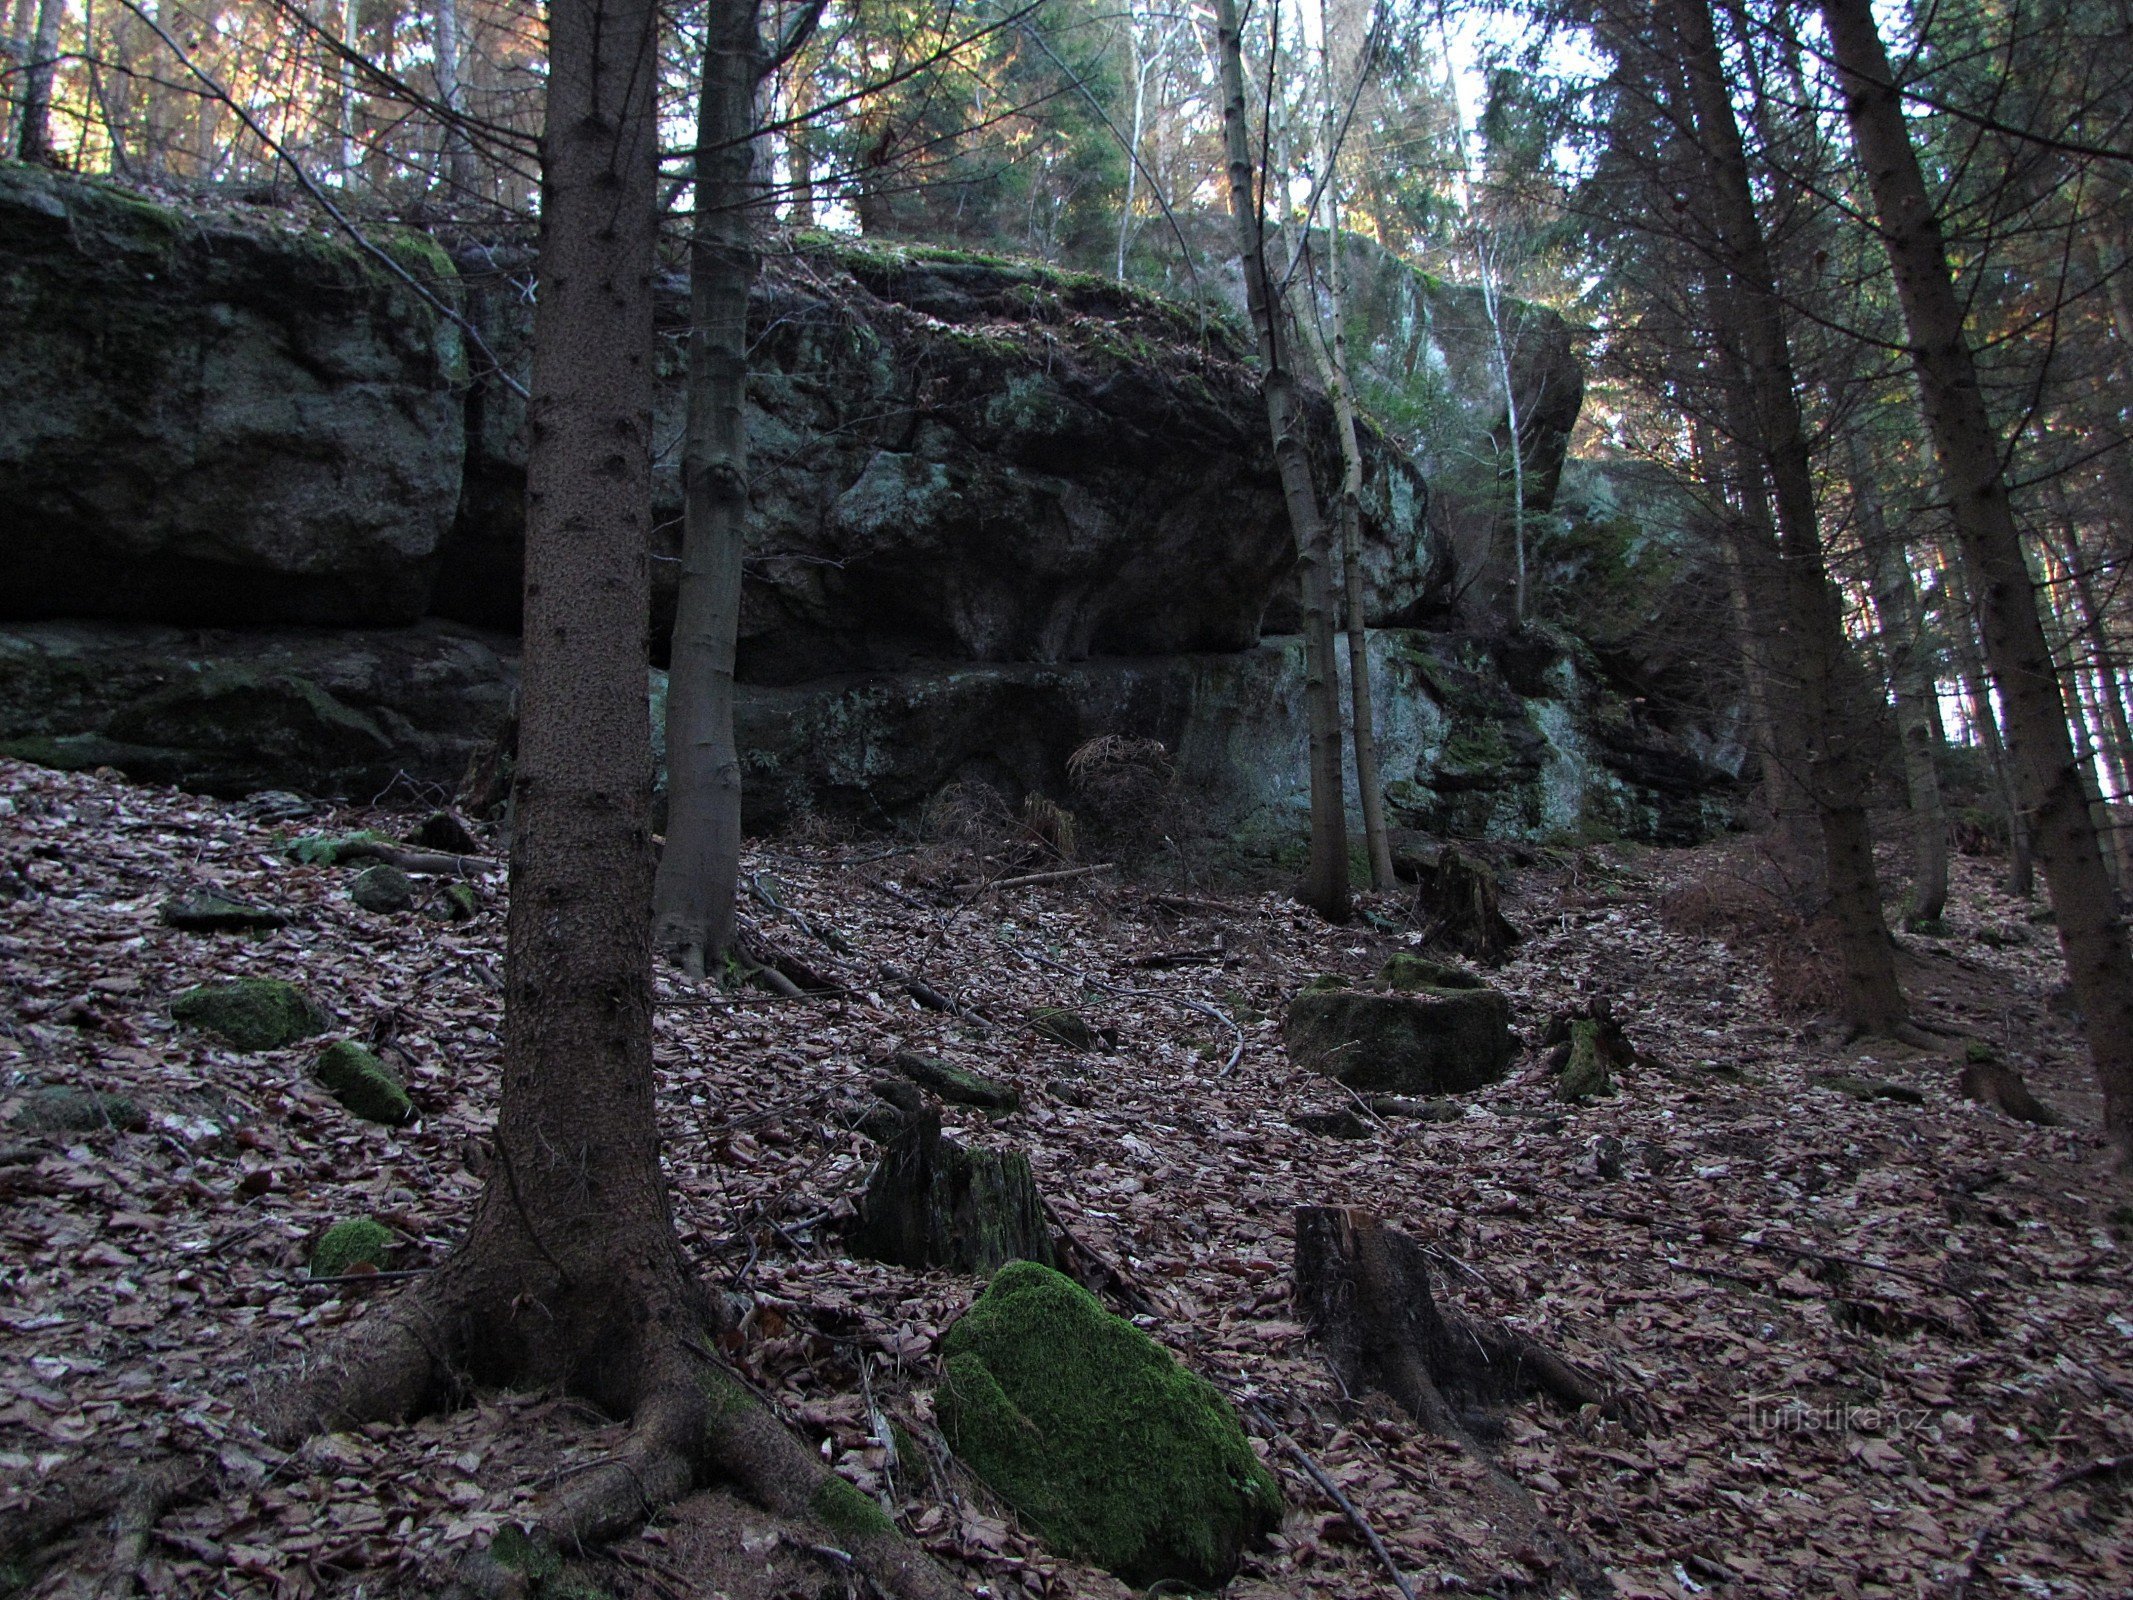 Pulčiny - acampamento e rocha de St. Svatojánka